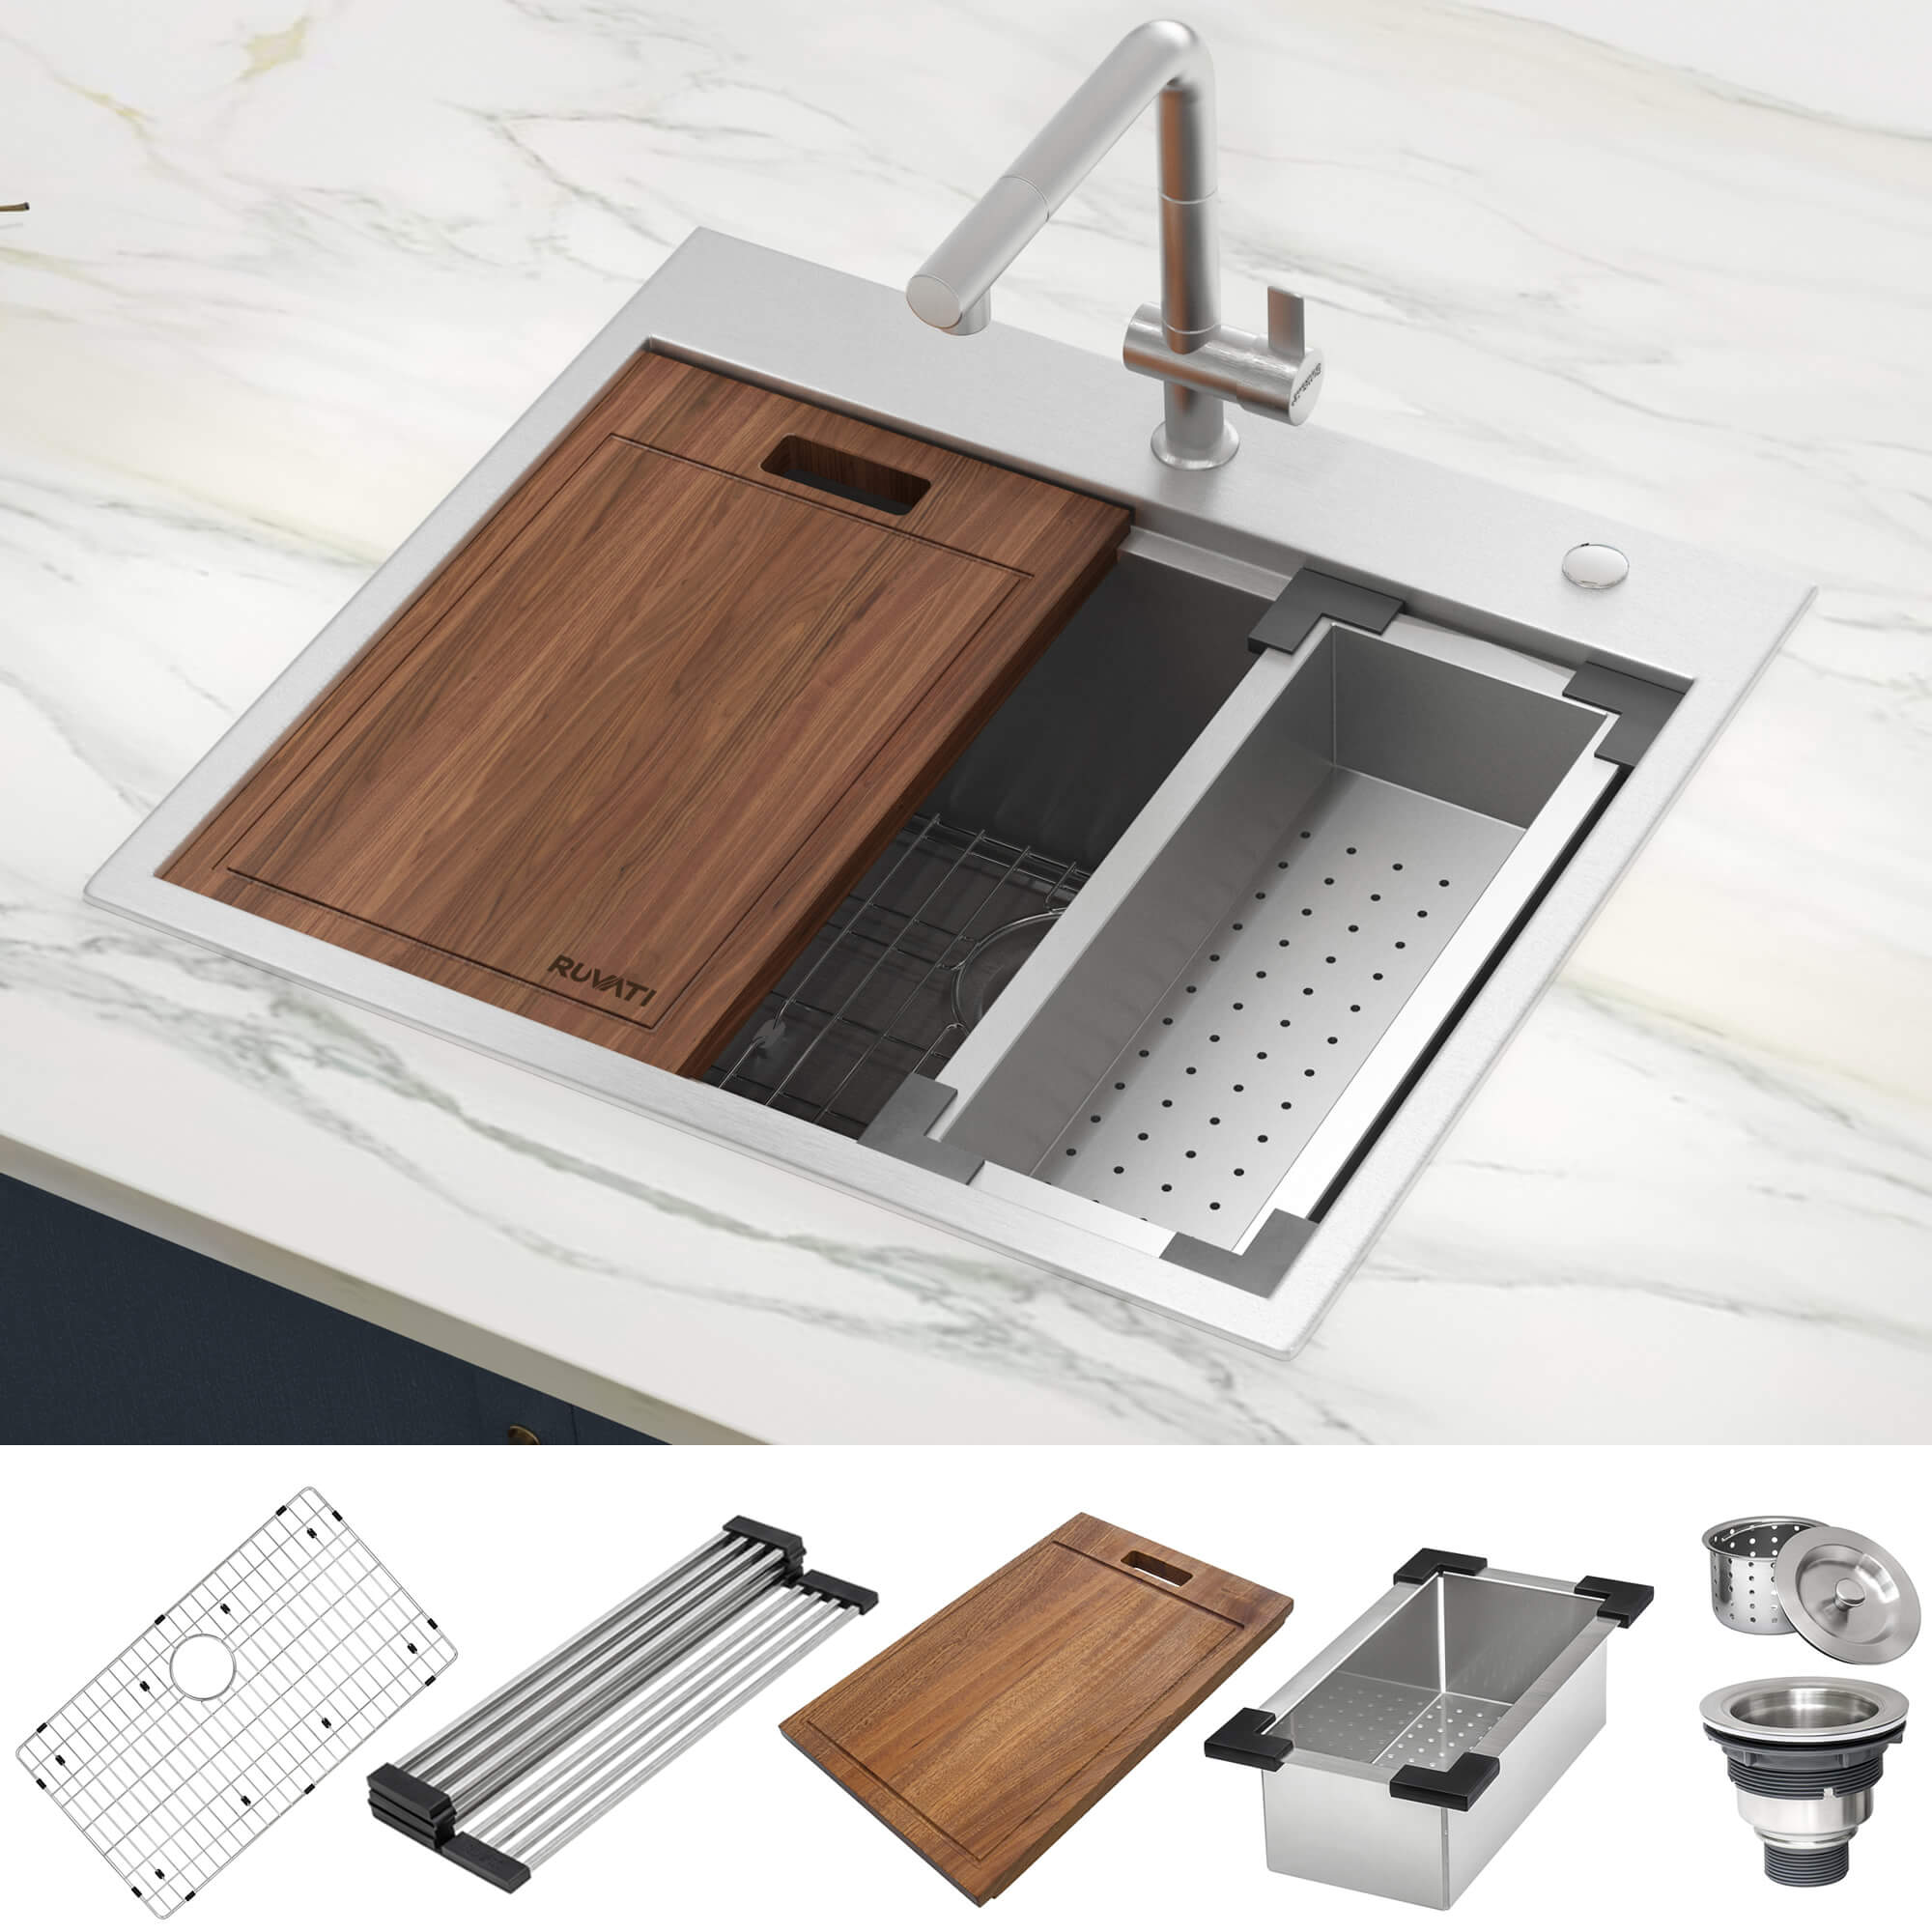 23 x 19 Inch Stainless Steel Sink X Home Undermount Kitchen Workstation Sink 16 Gauge Single Bowl with All Sink Accessories